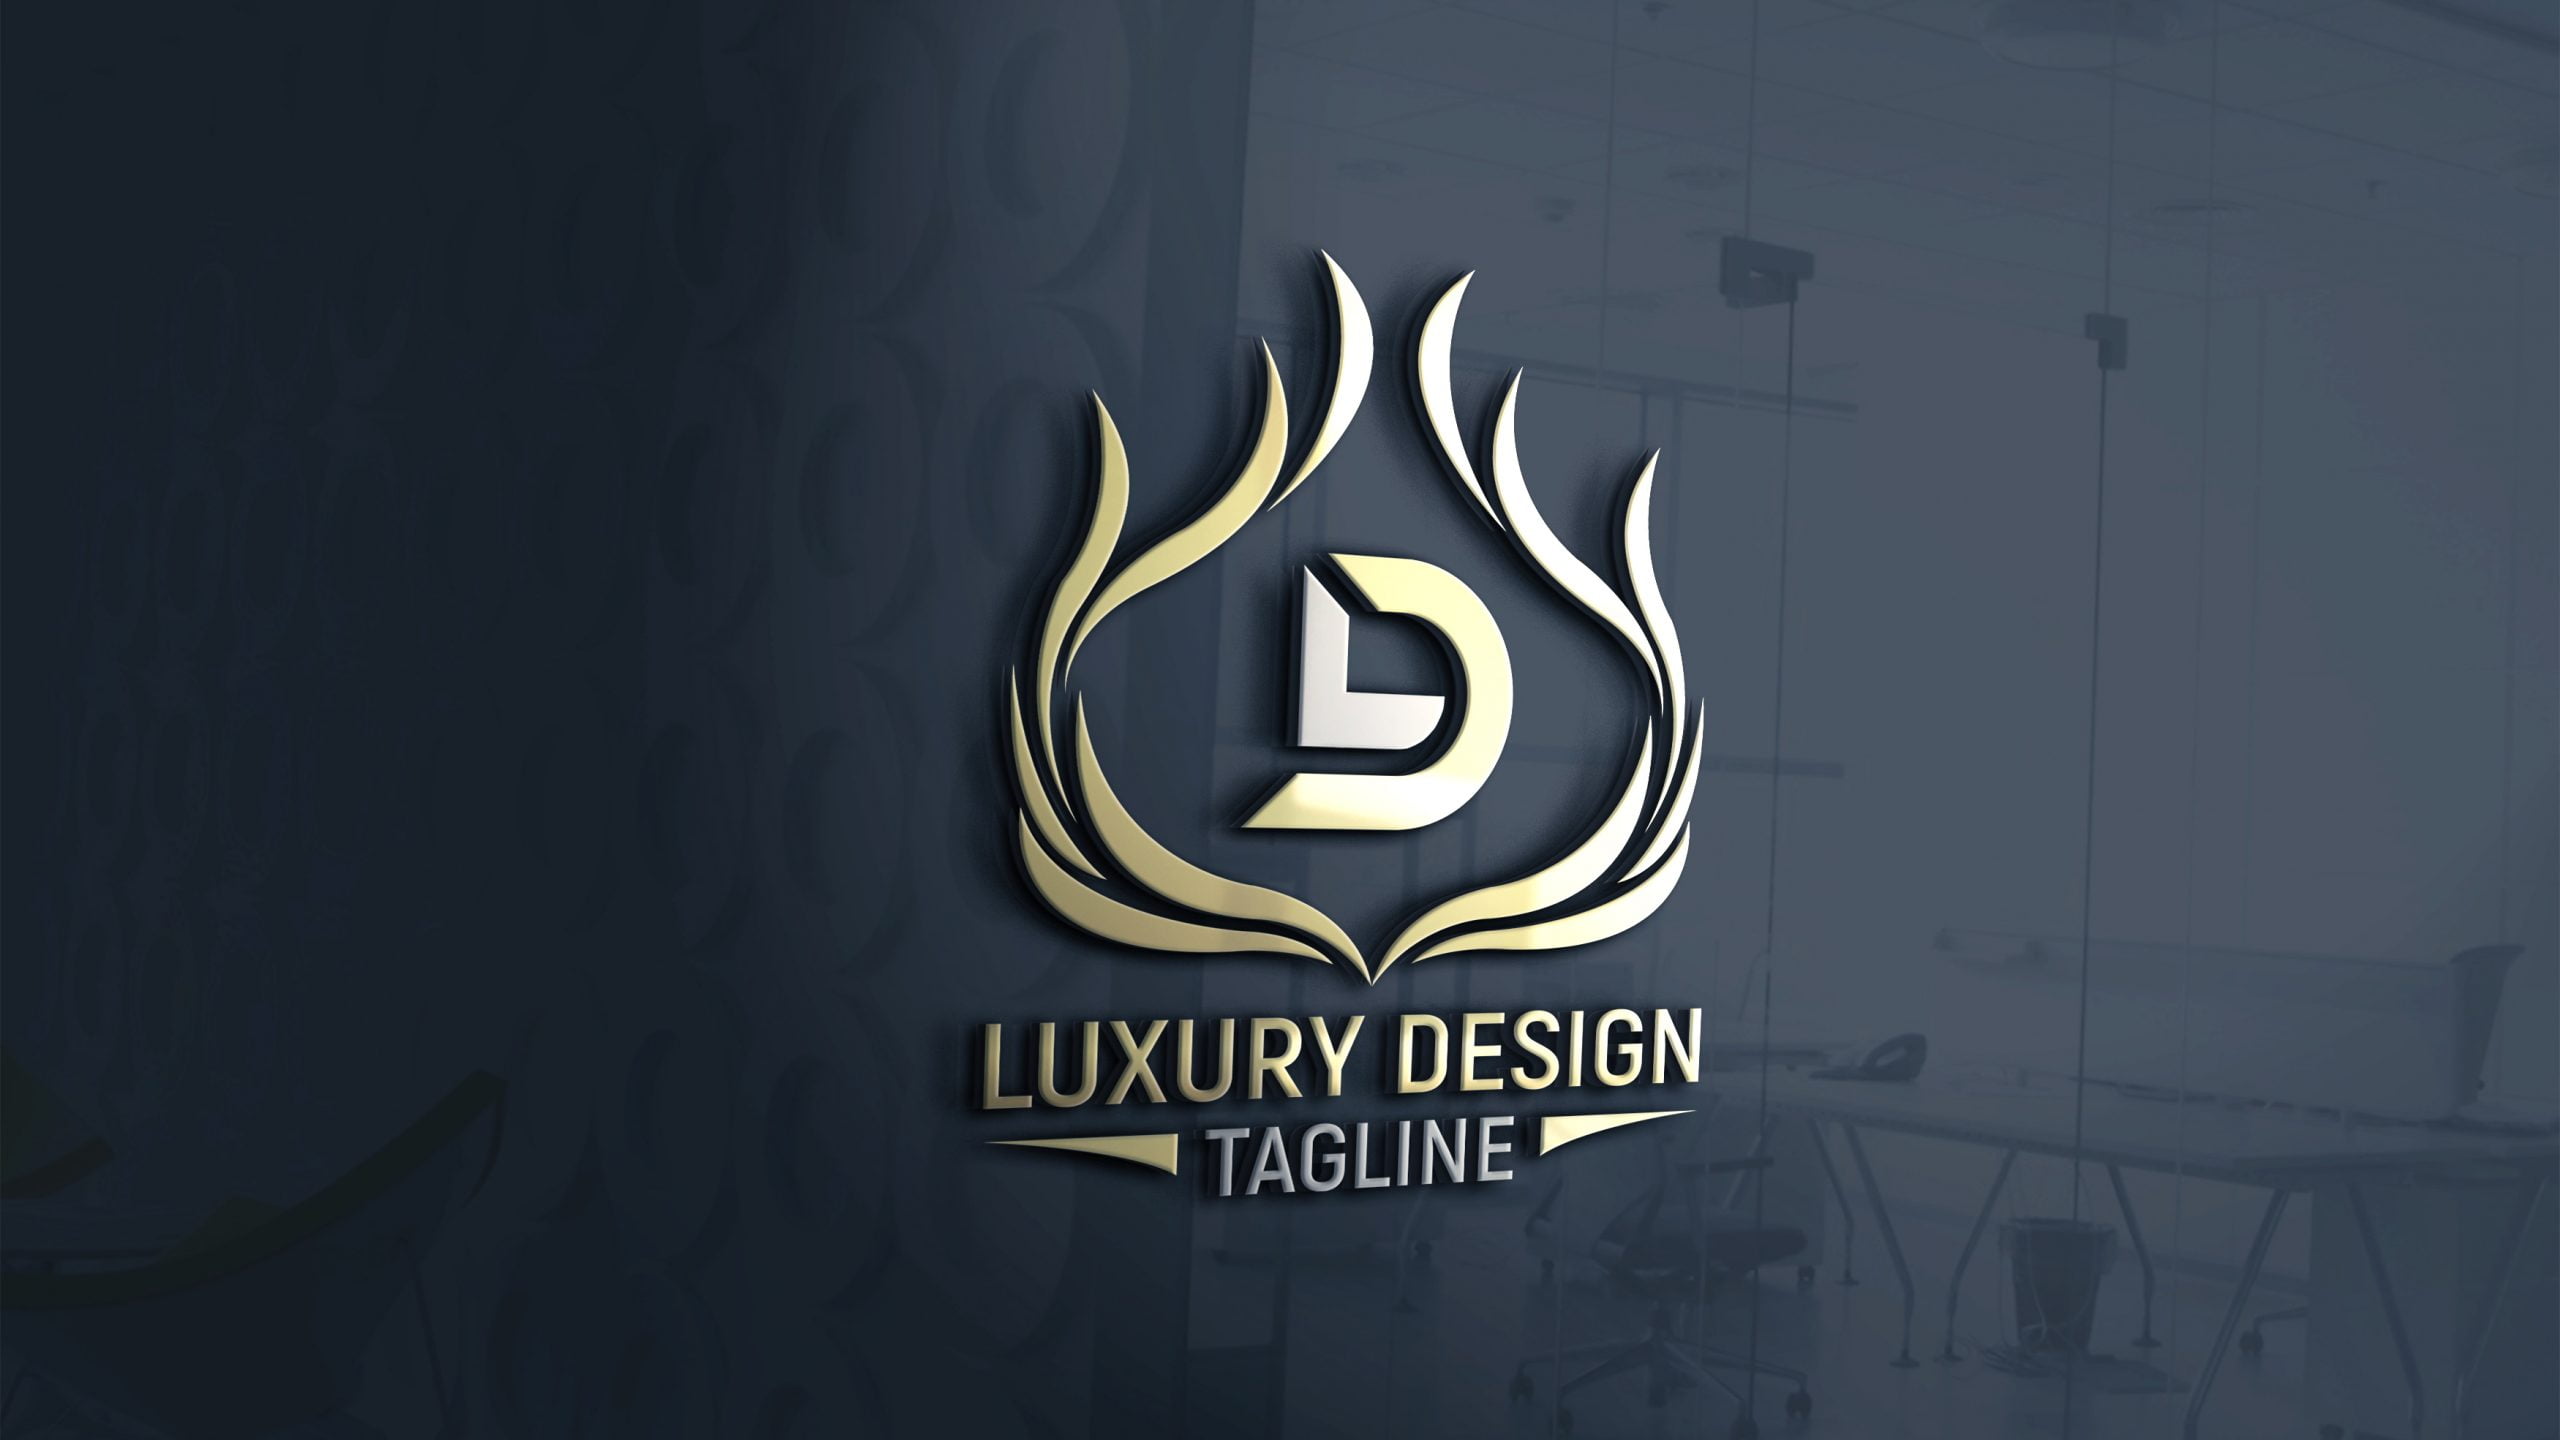 Logo Of Luxury Brands - Best Design Idea